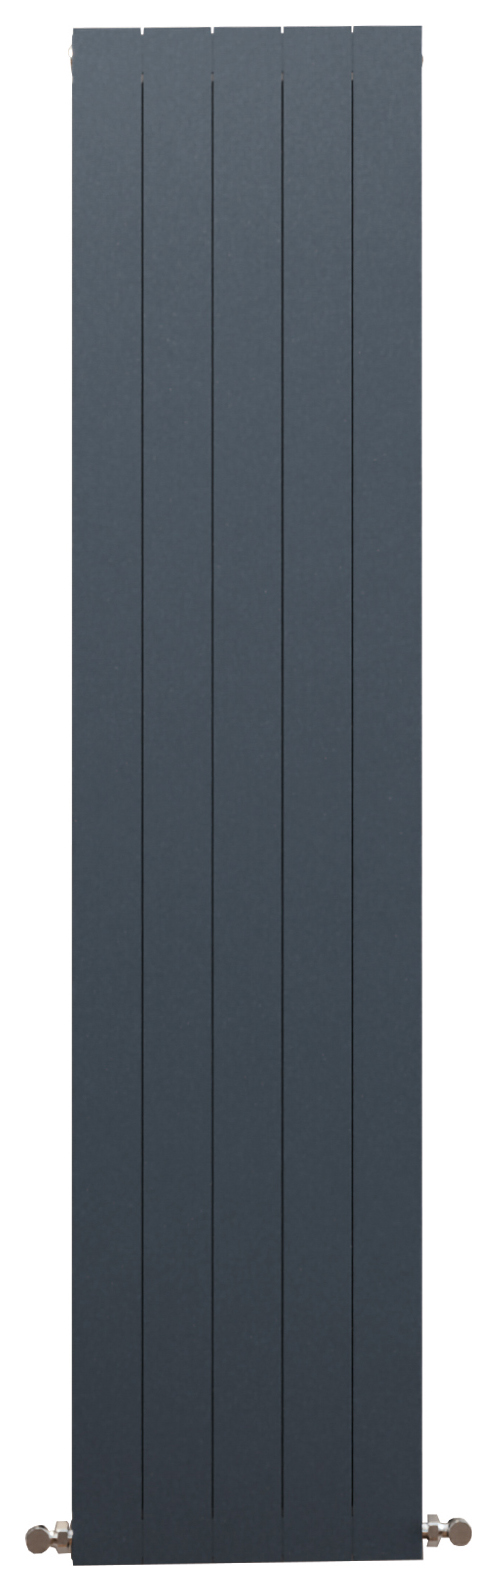 Towelrads Walton Vertical Aluminium Designer Radiator - Anthracite 1800mm - Various Widths Available